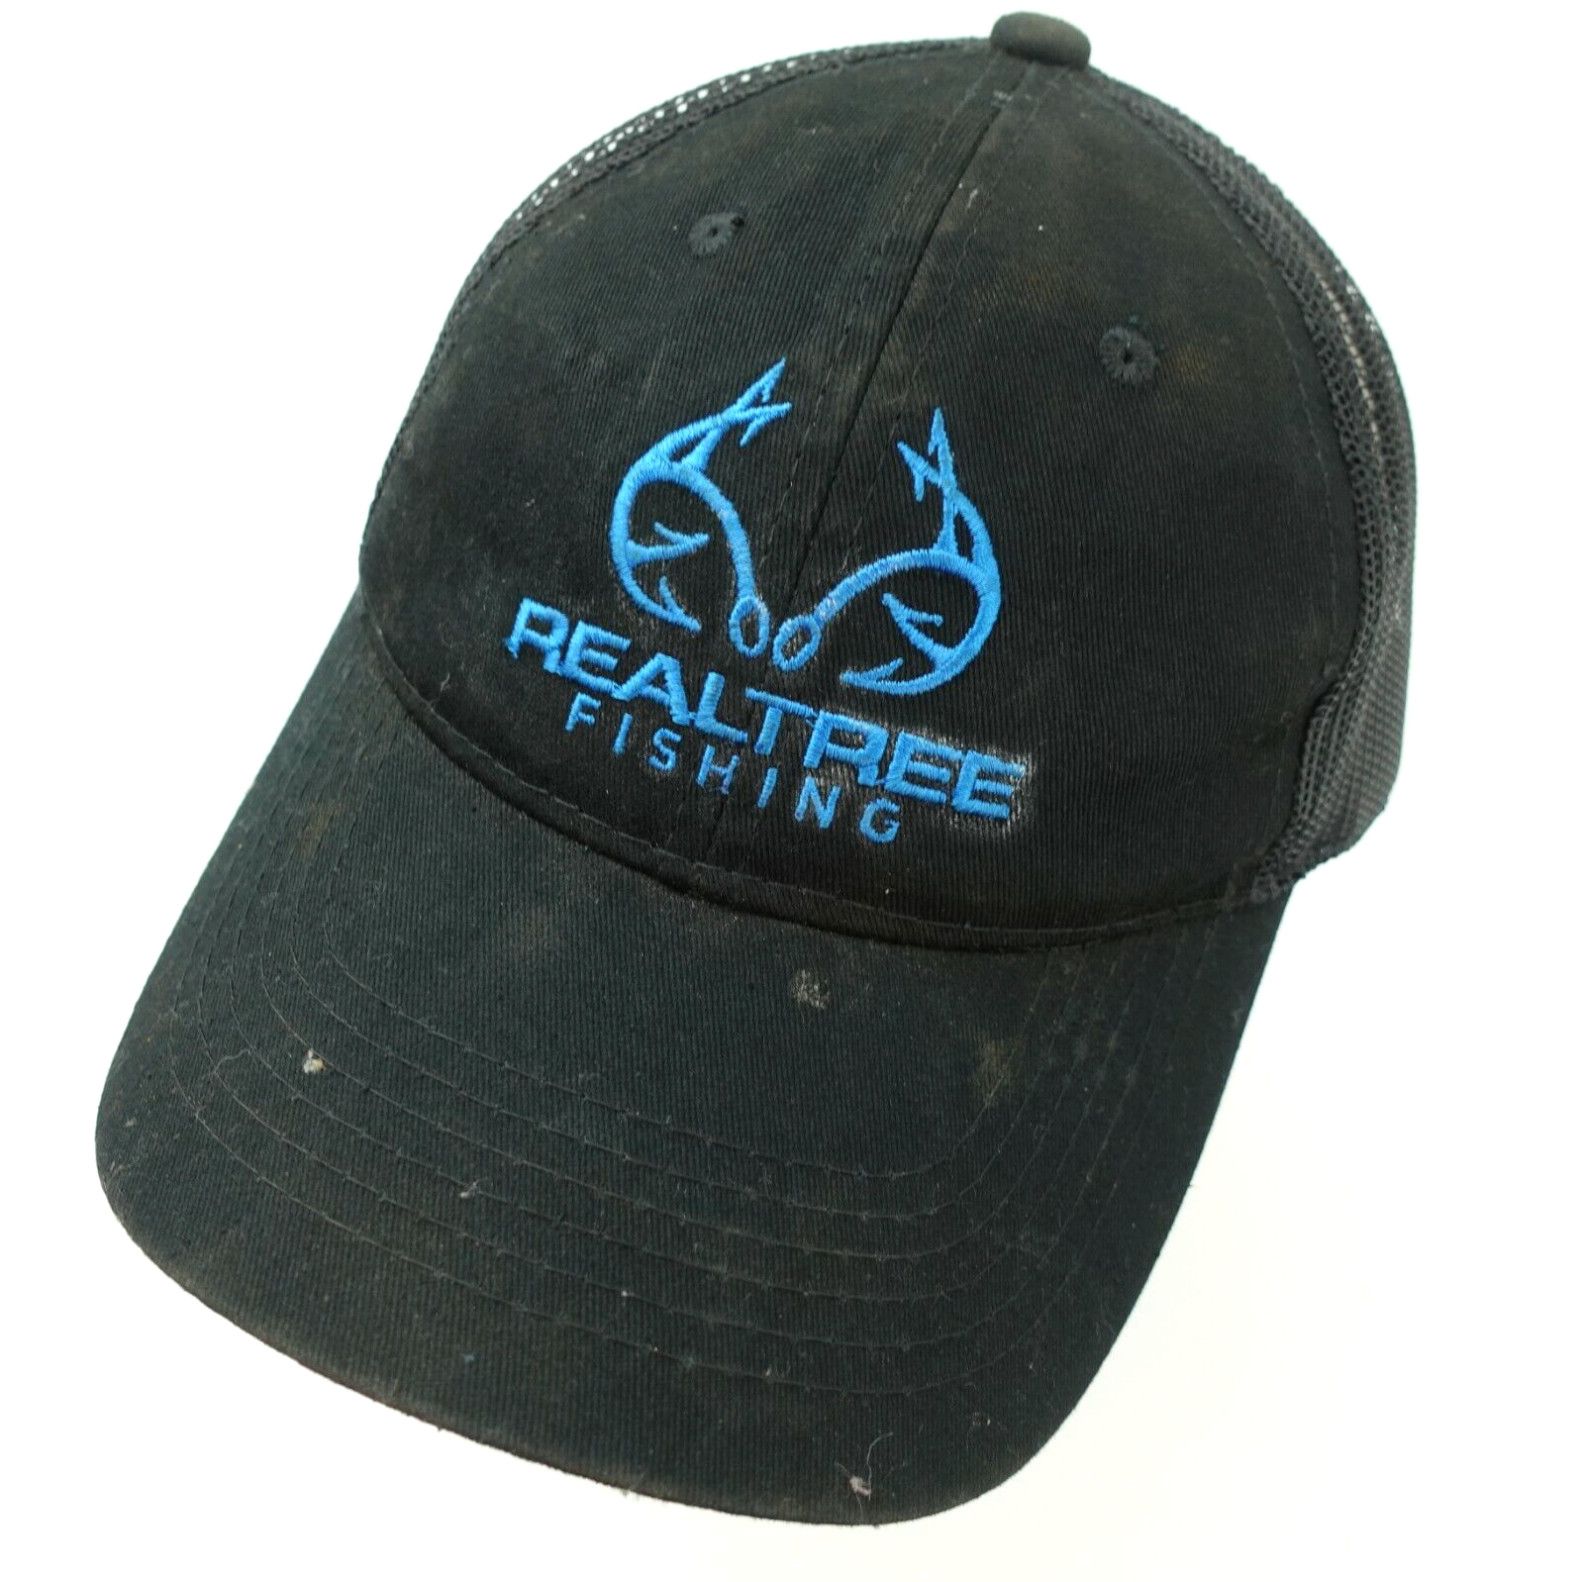 Realtree Realtree Patriotic Fishing Trucker Hat Fisherman Blue Cap